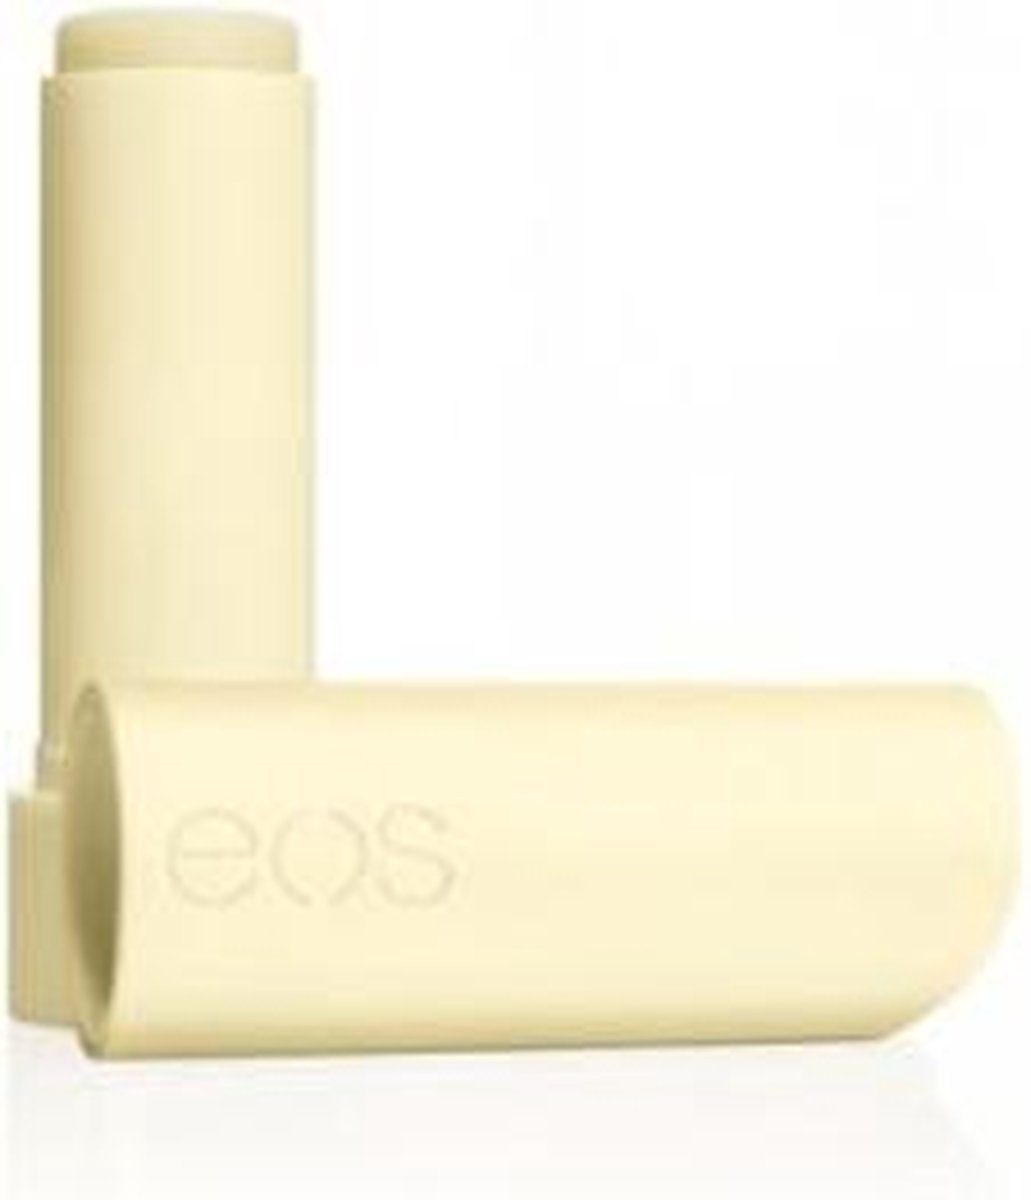 Eos Lipstick 